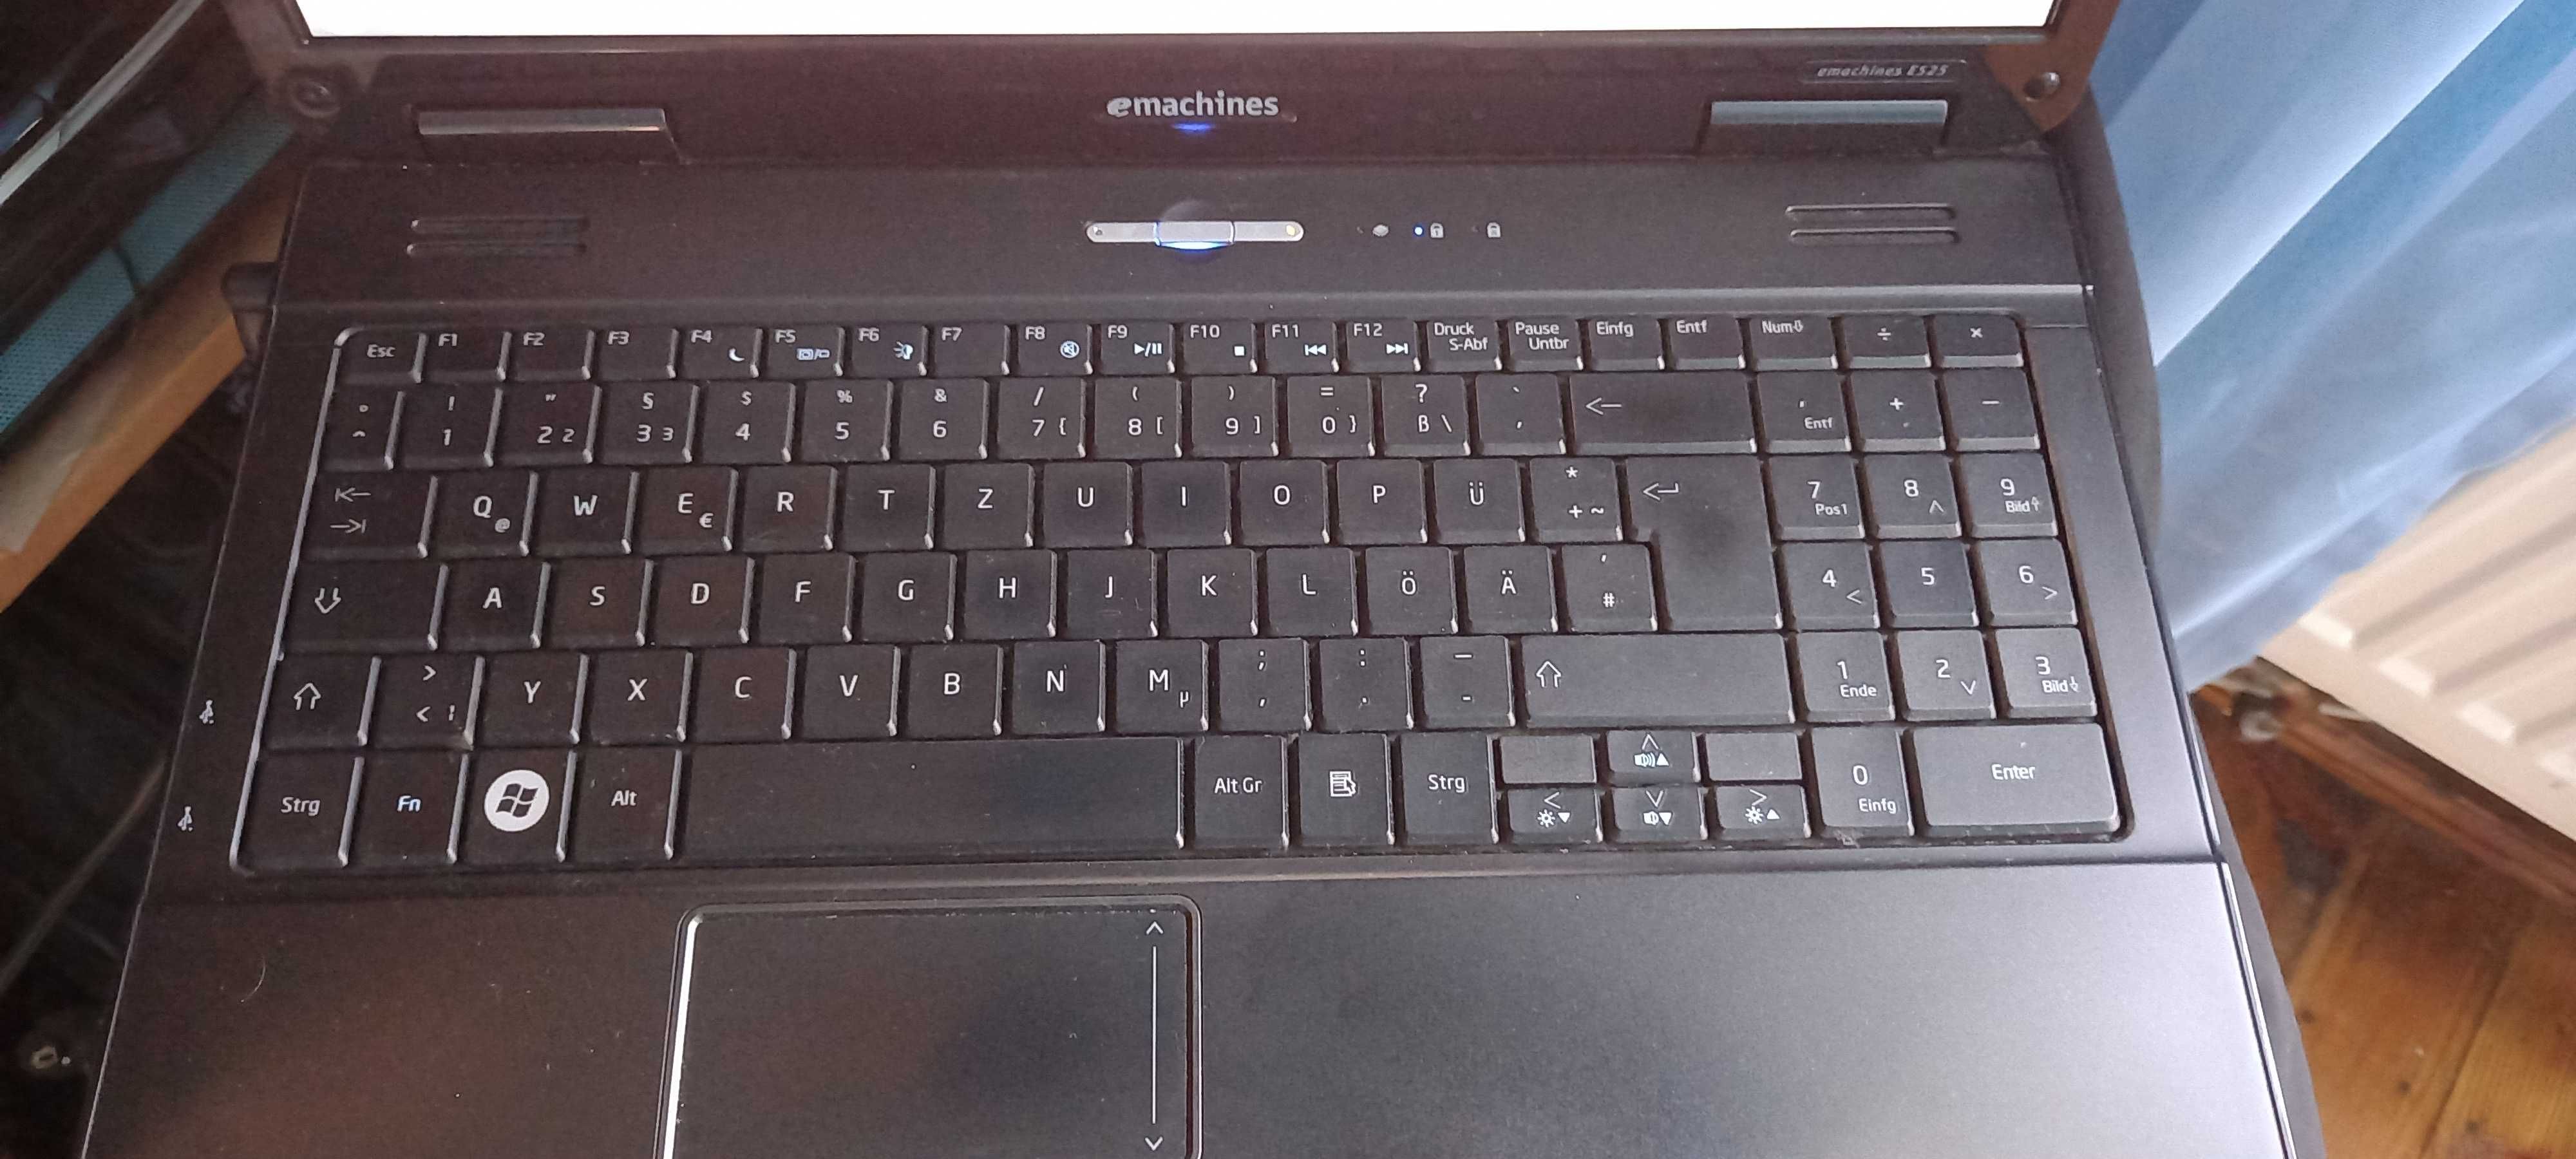 Laptop Emachines E525. Pret fix